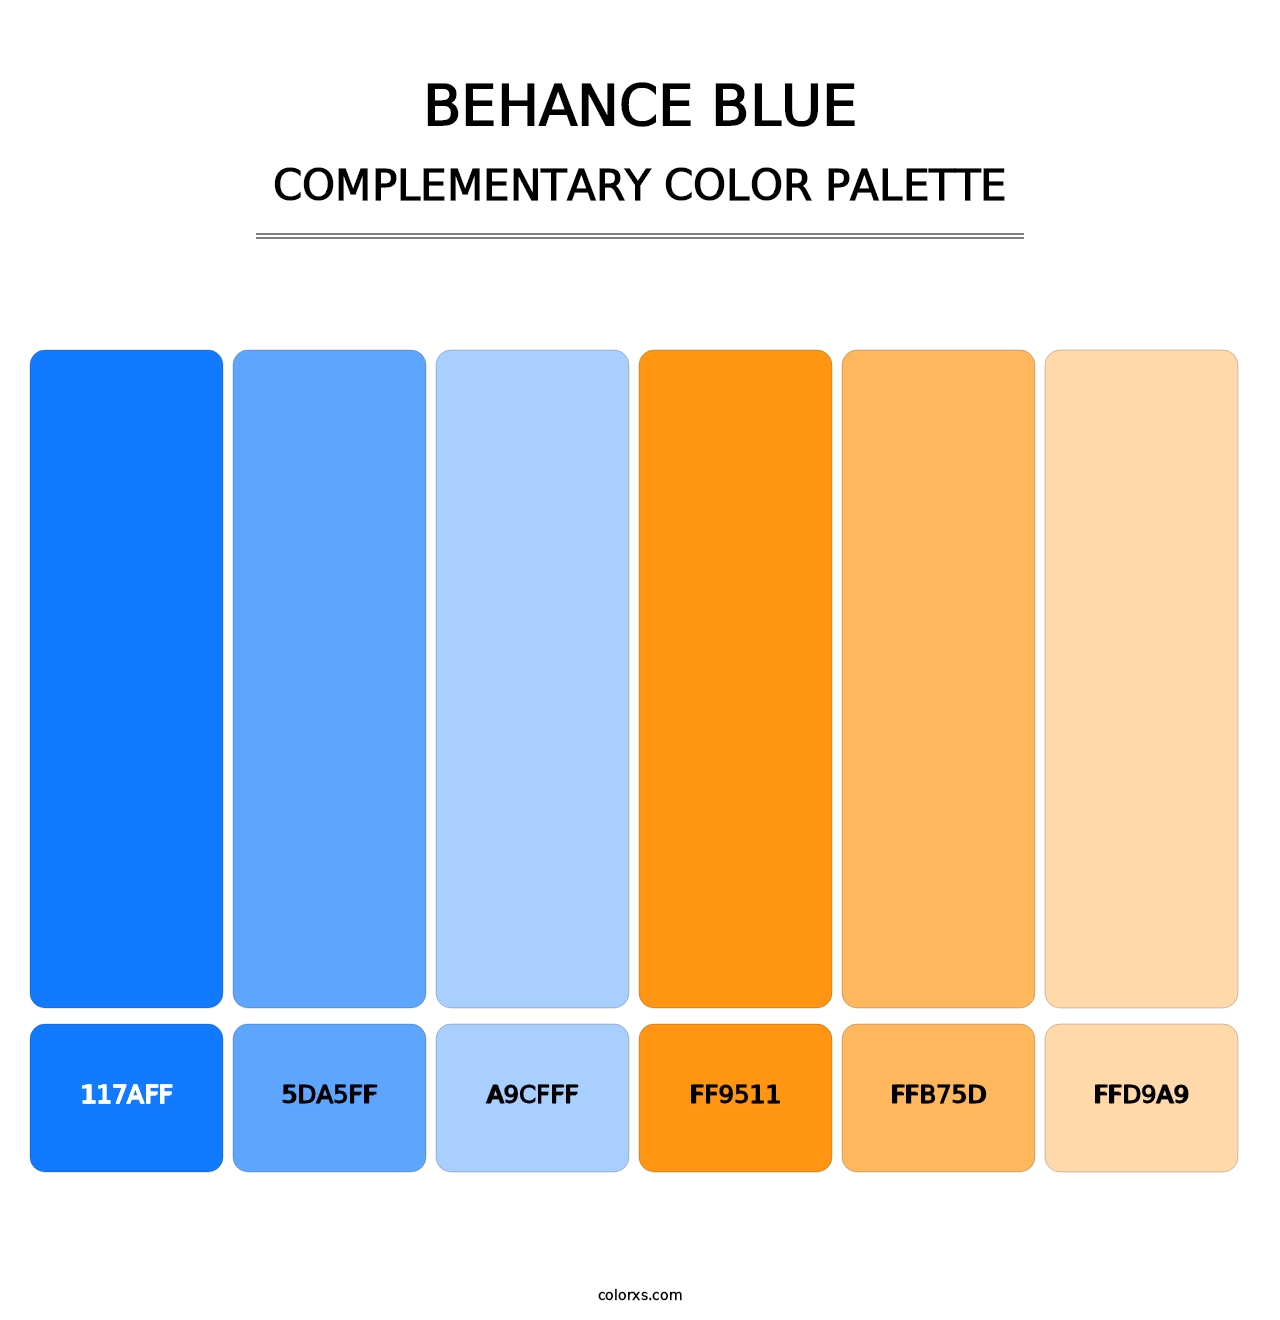 Behance Blue - Complementary Color Palette